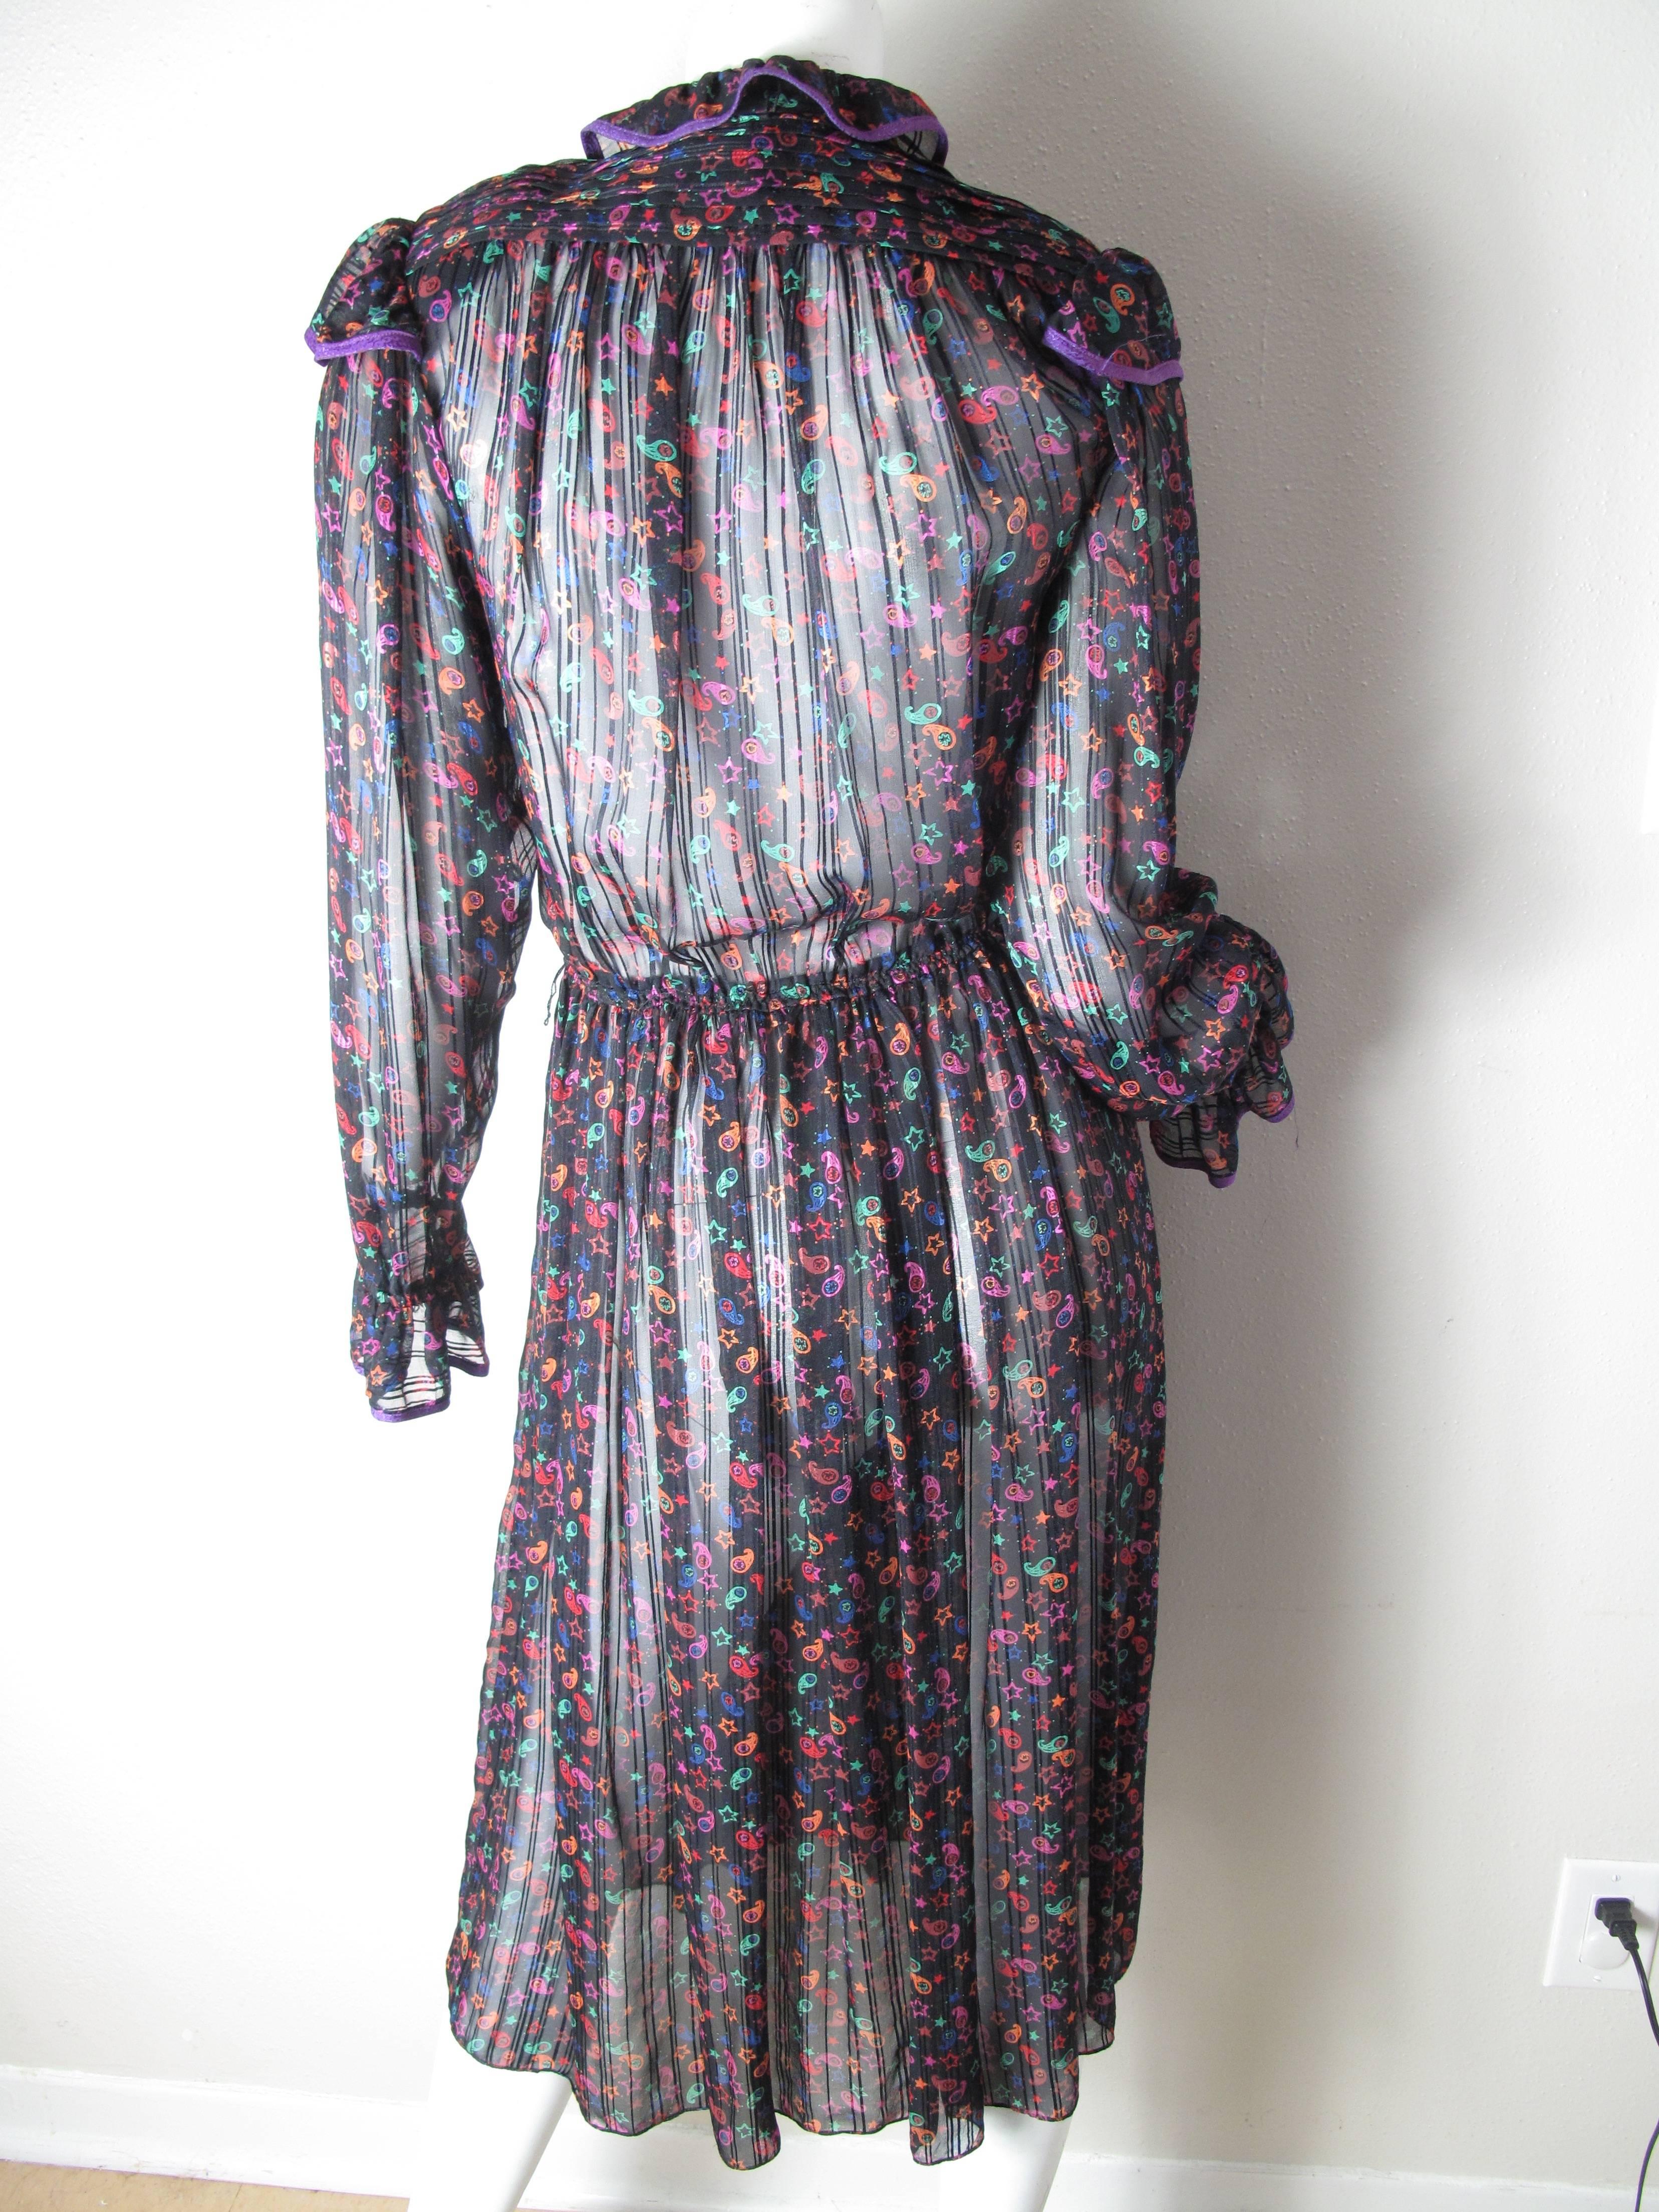 Zandra Rhodes star printed silk chiffon dress.  Elastic waist and cuffs. Ruffle collar. Size 4
Condition: very good